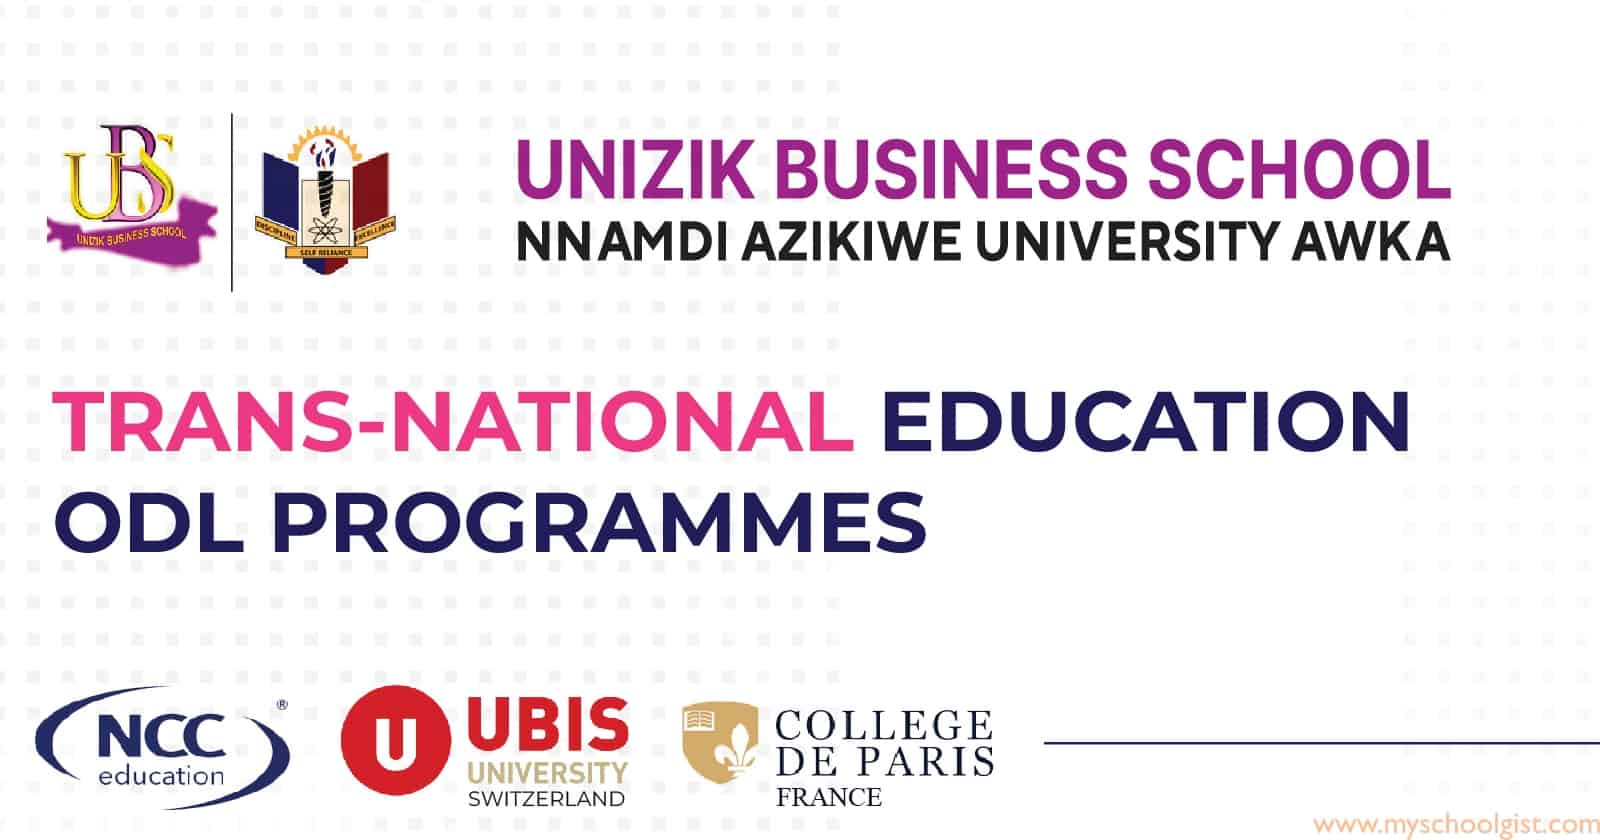 UNIZIK Business School Trans-National Education ODL Programmes